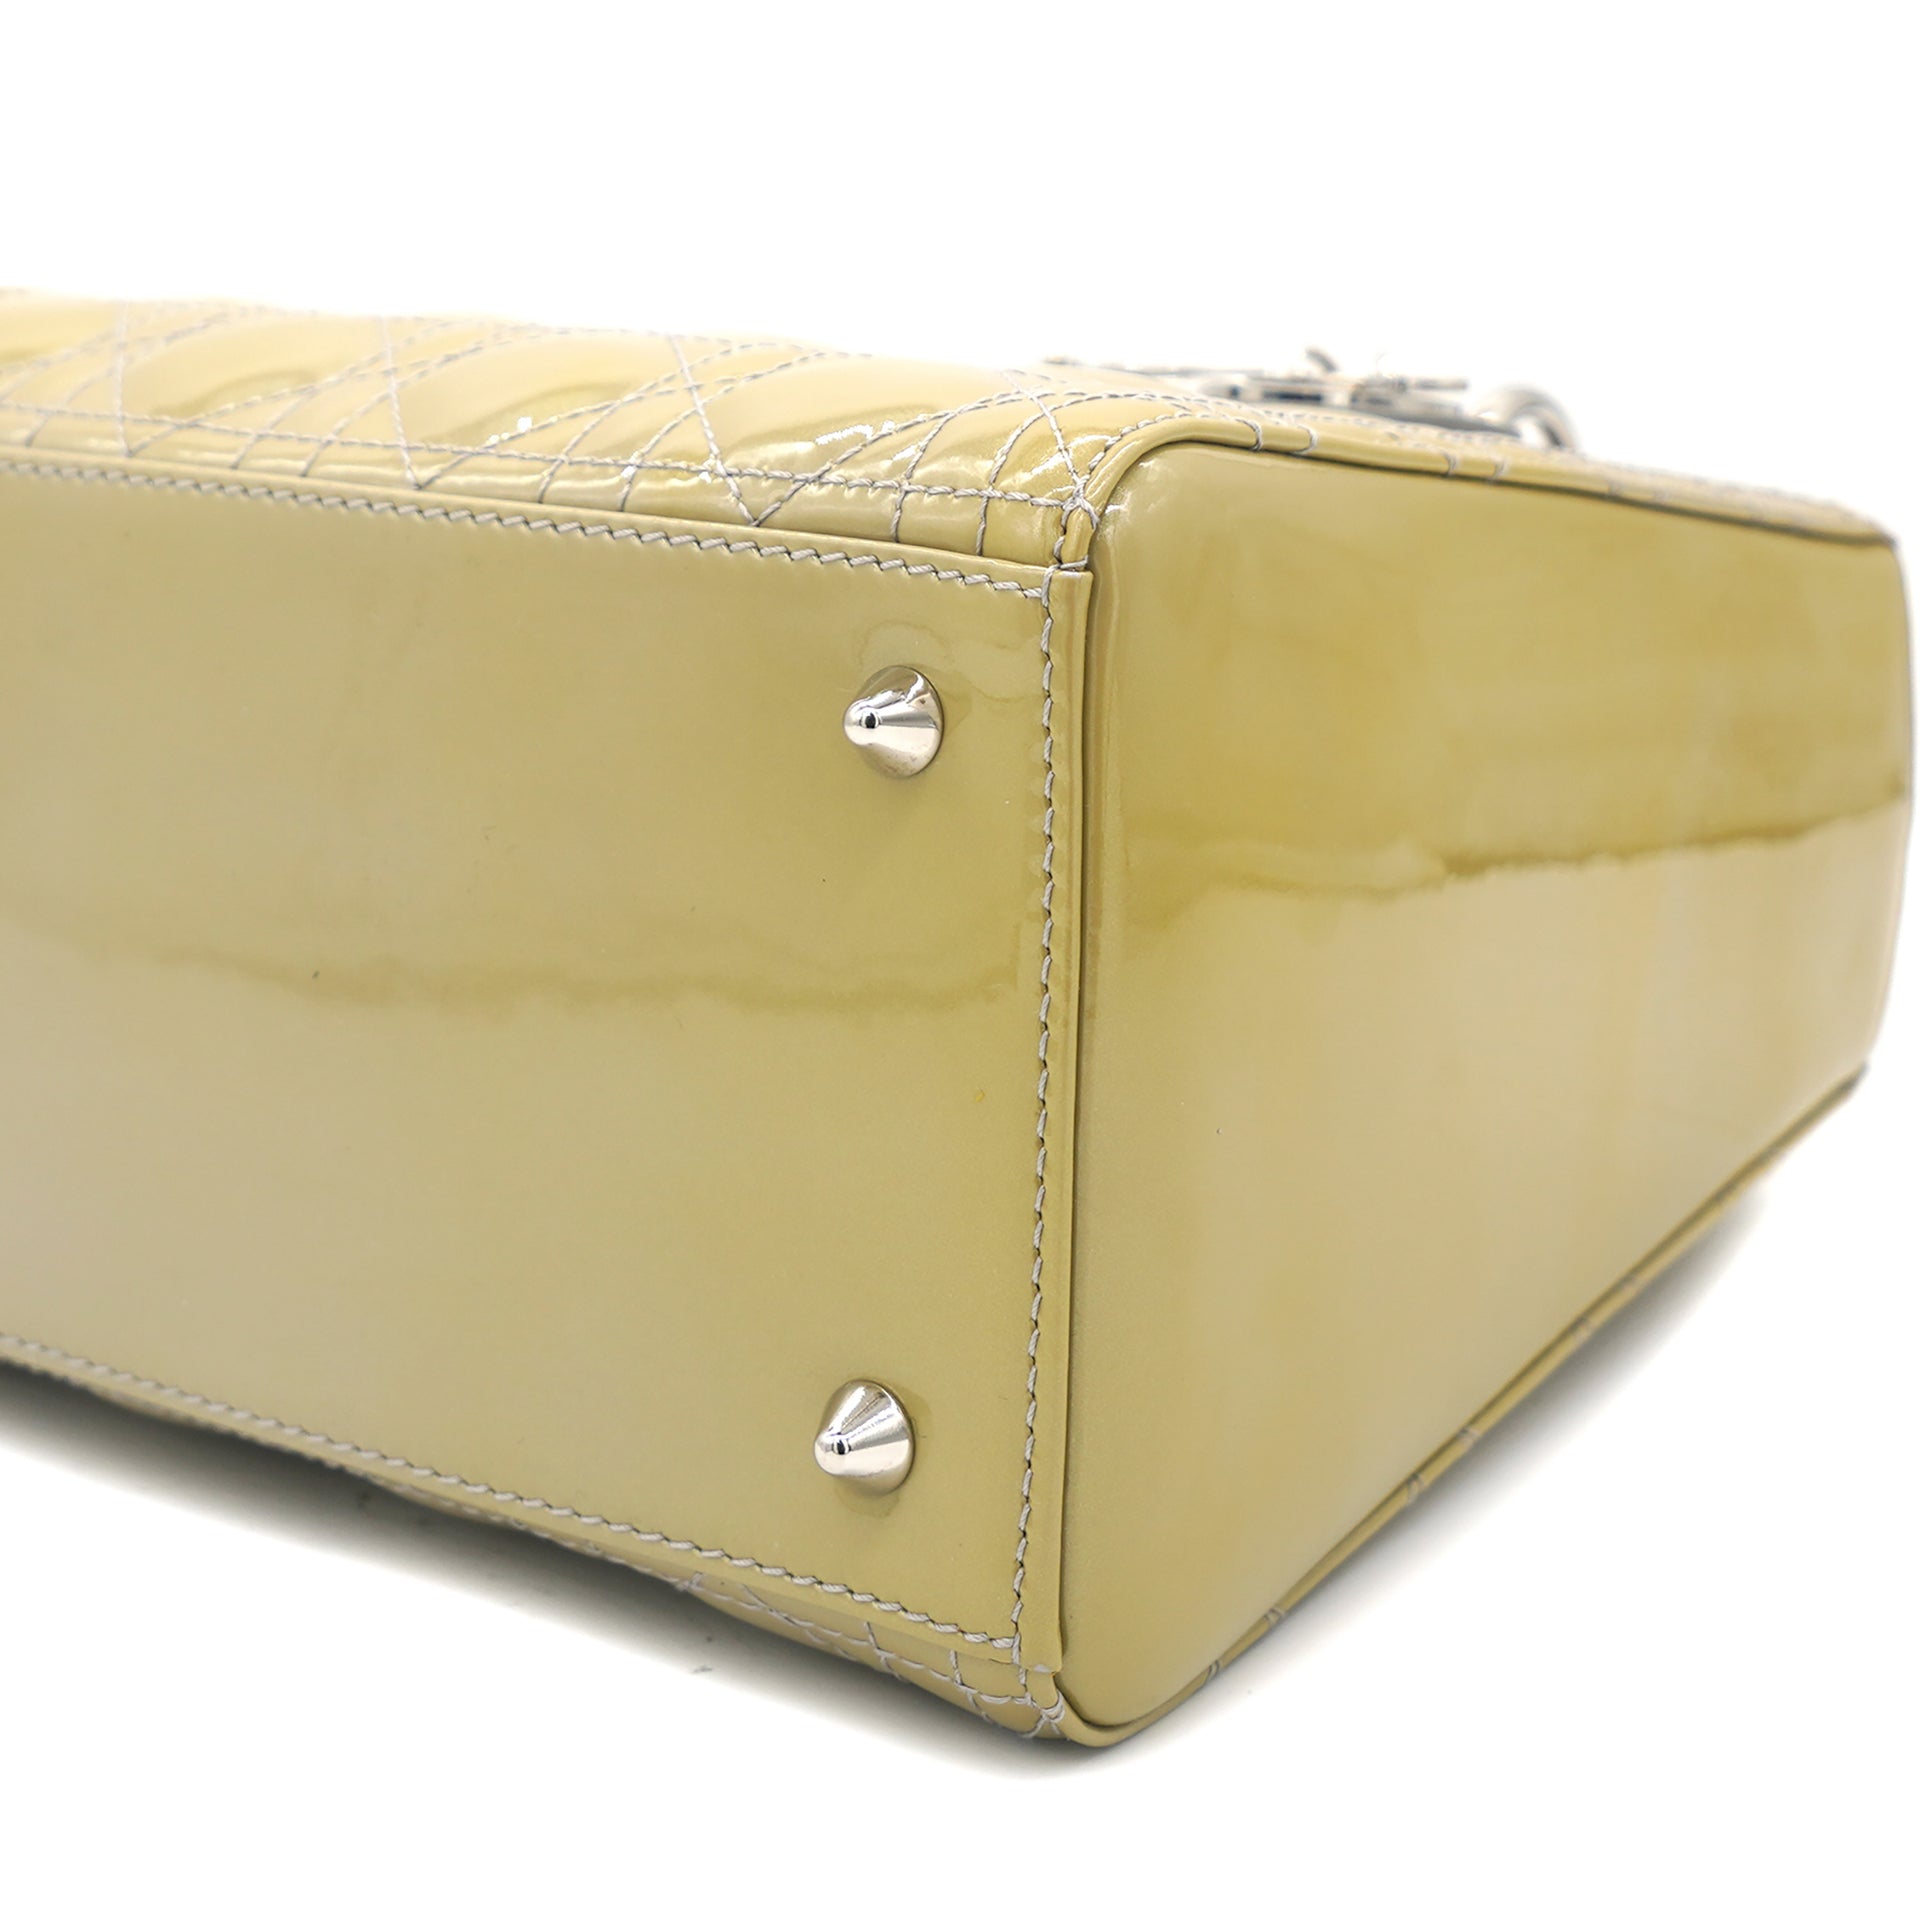 Lady Dior Medium Yellow Patent Bag